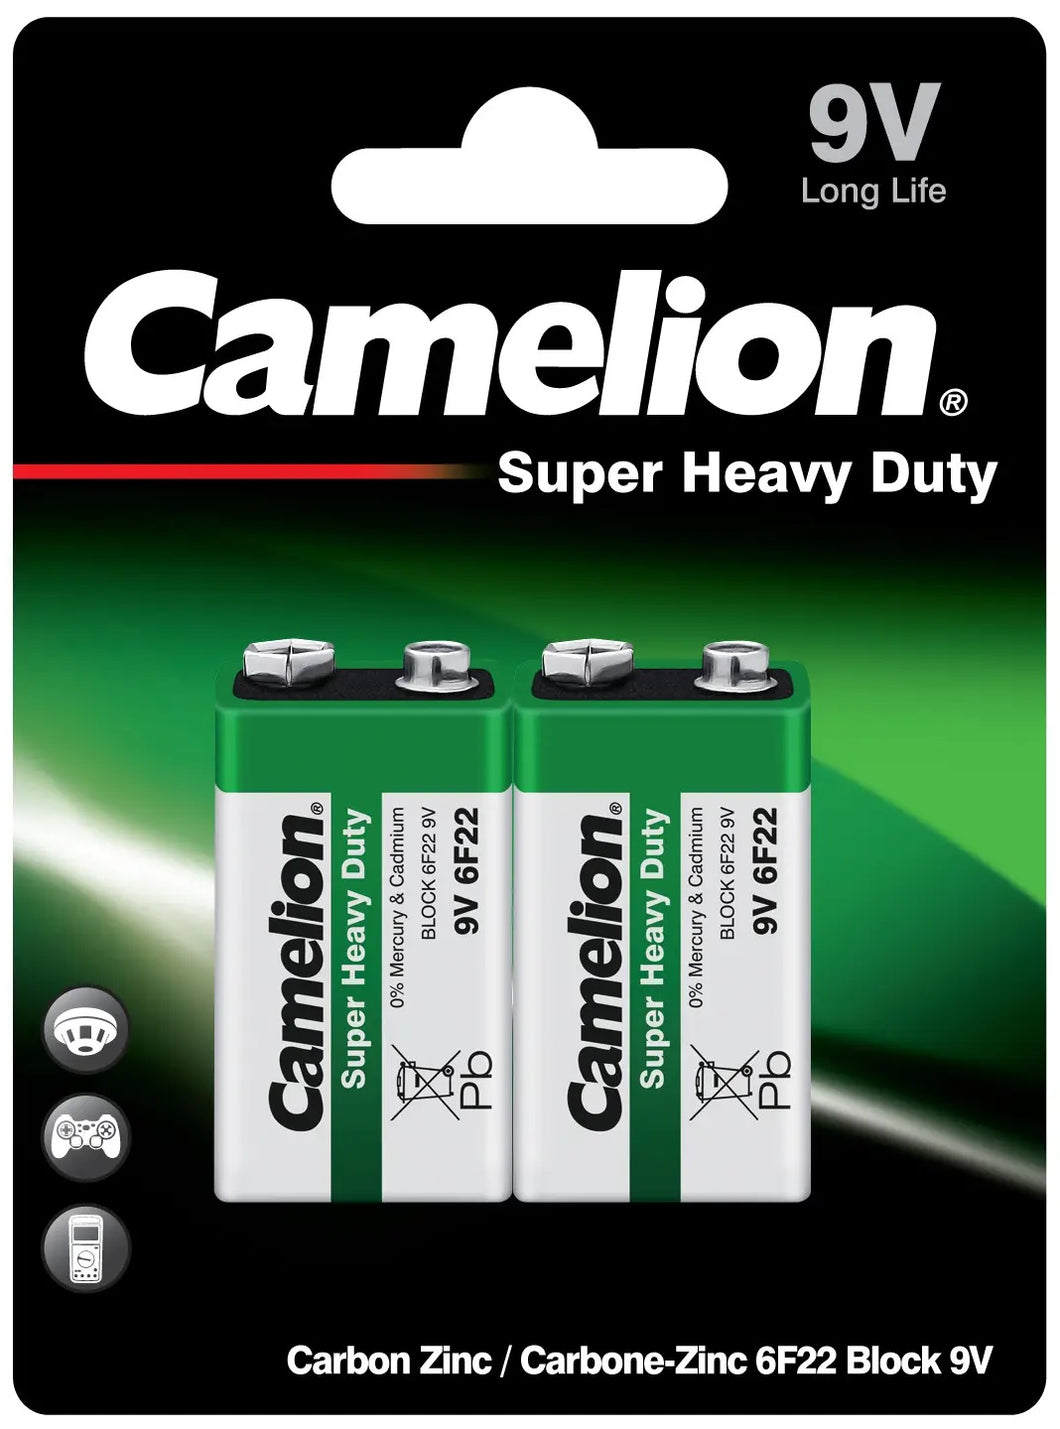 CAMELION 9V SUPER HEAVY DUTY BATTERY - 2 PACK-(8122321961215)